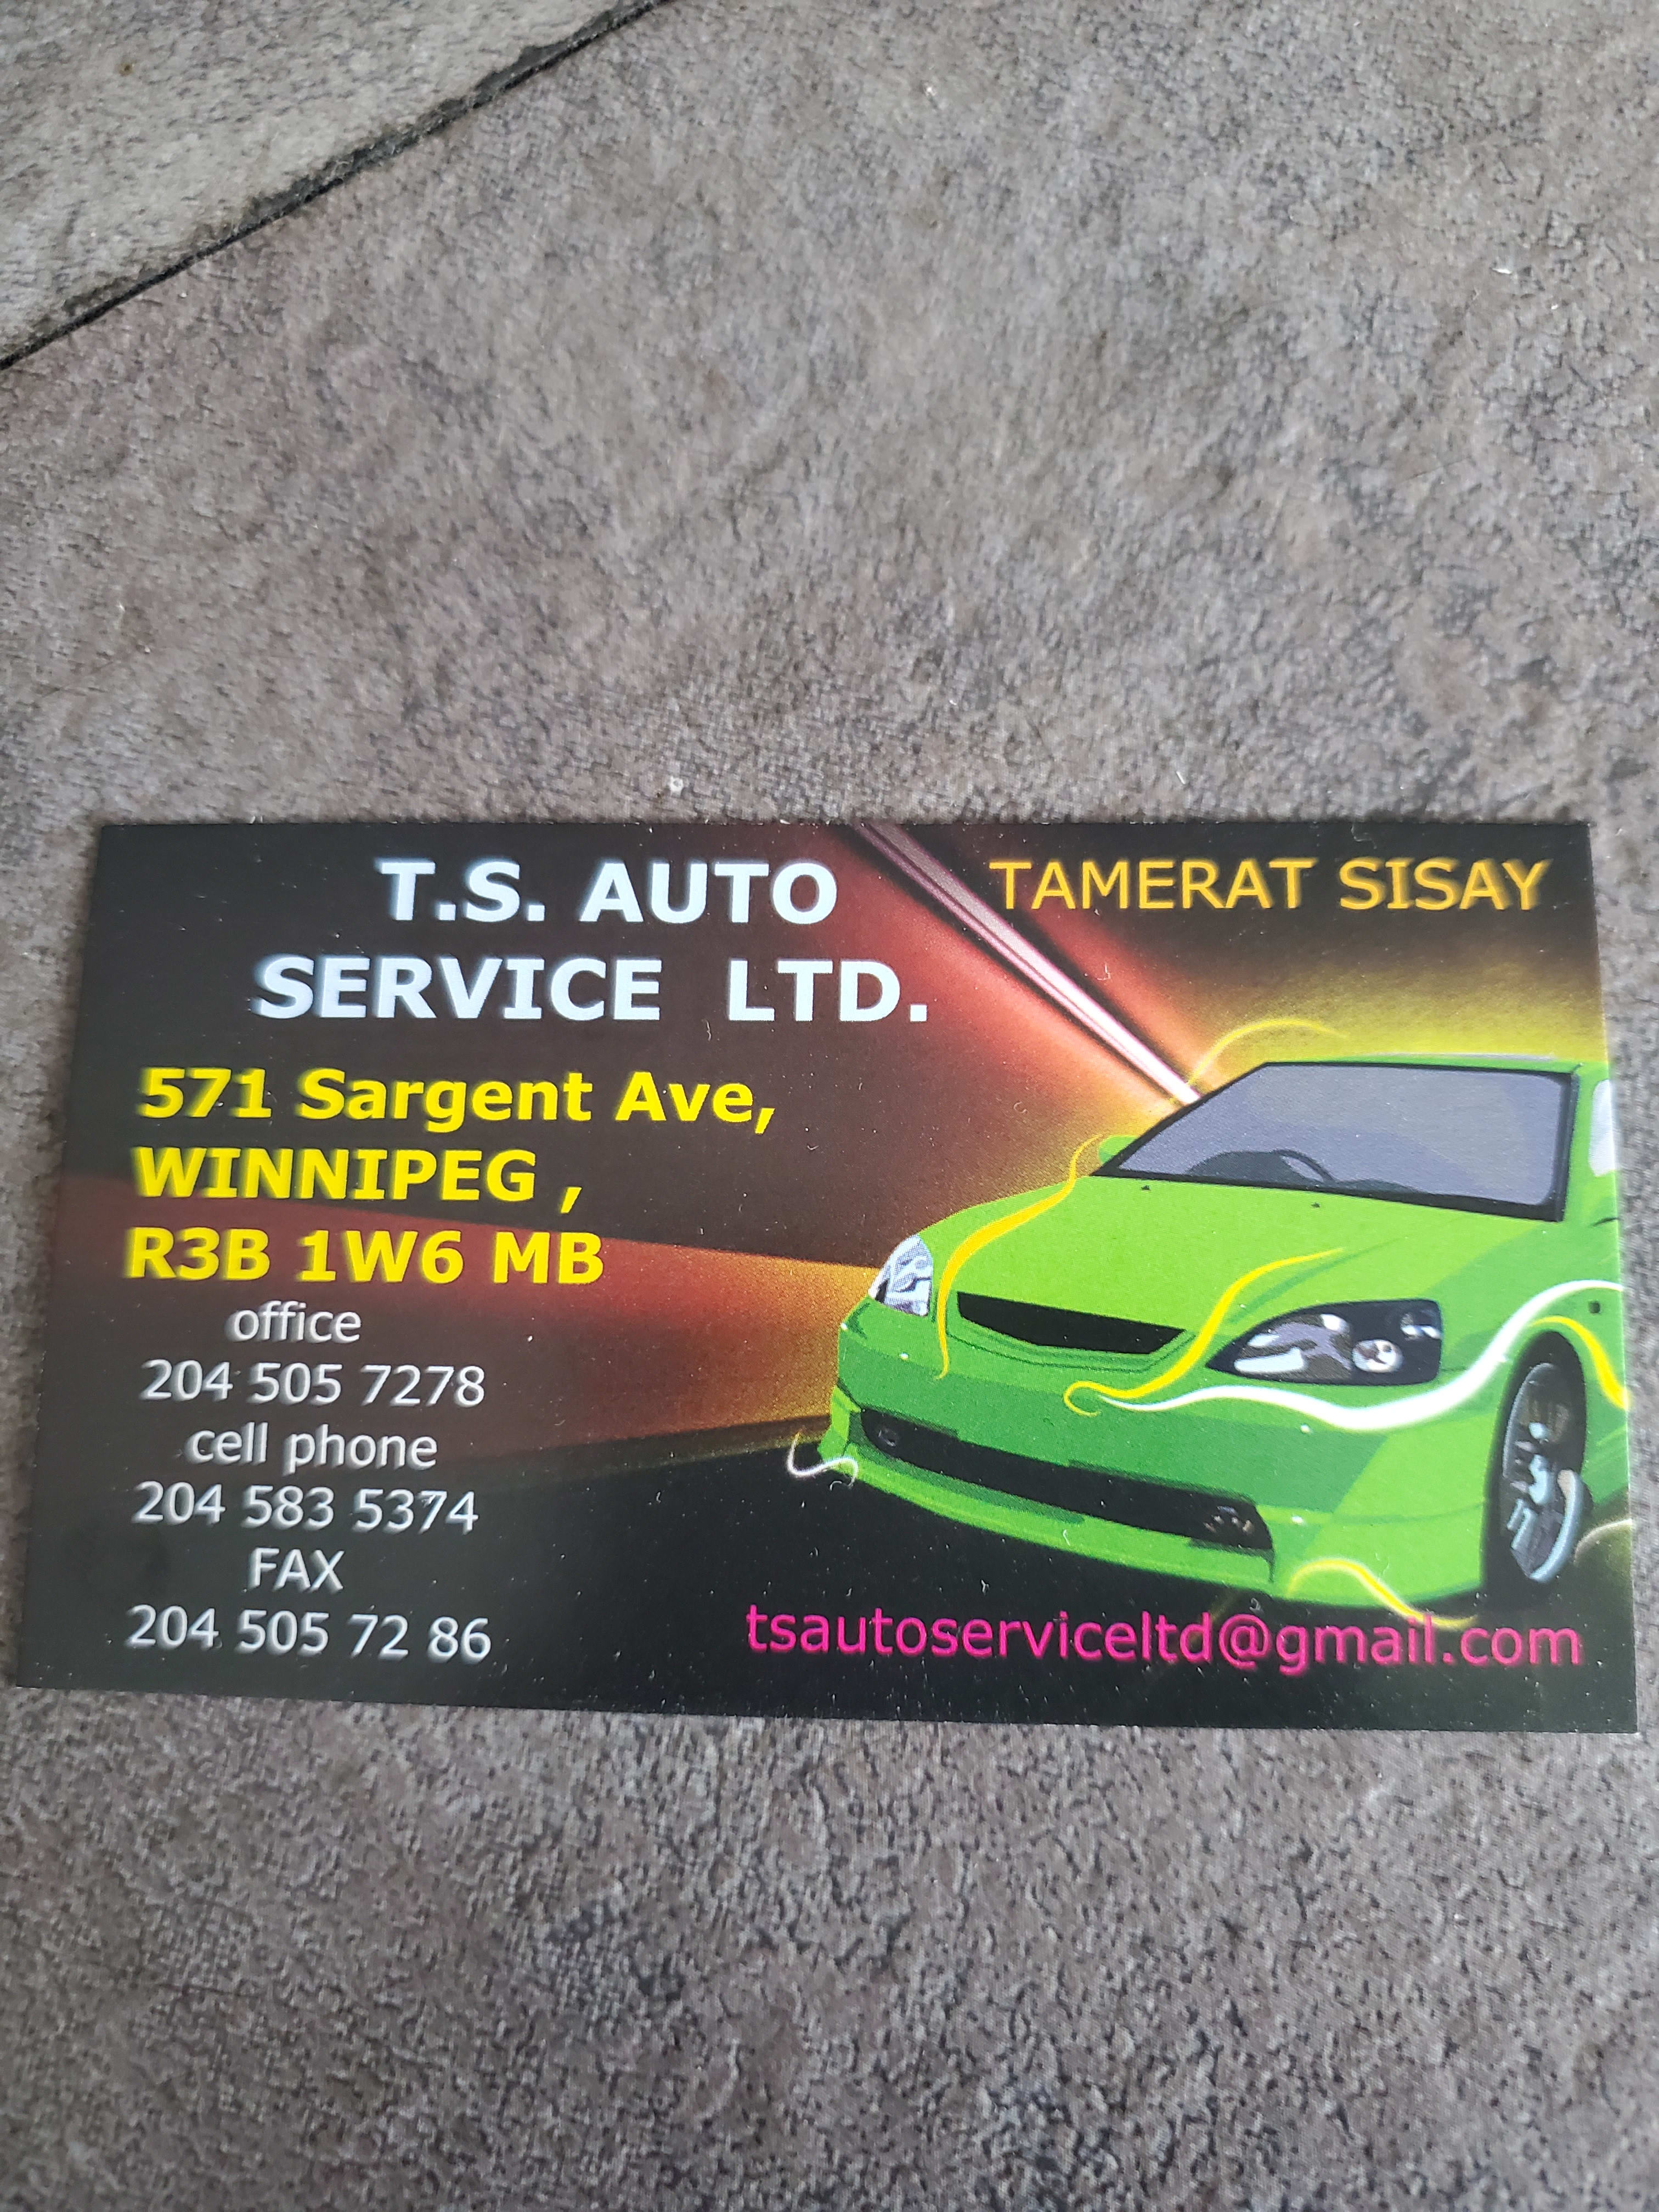 T.S. Auto Service Ltd.